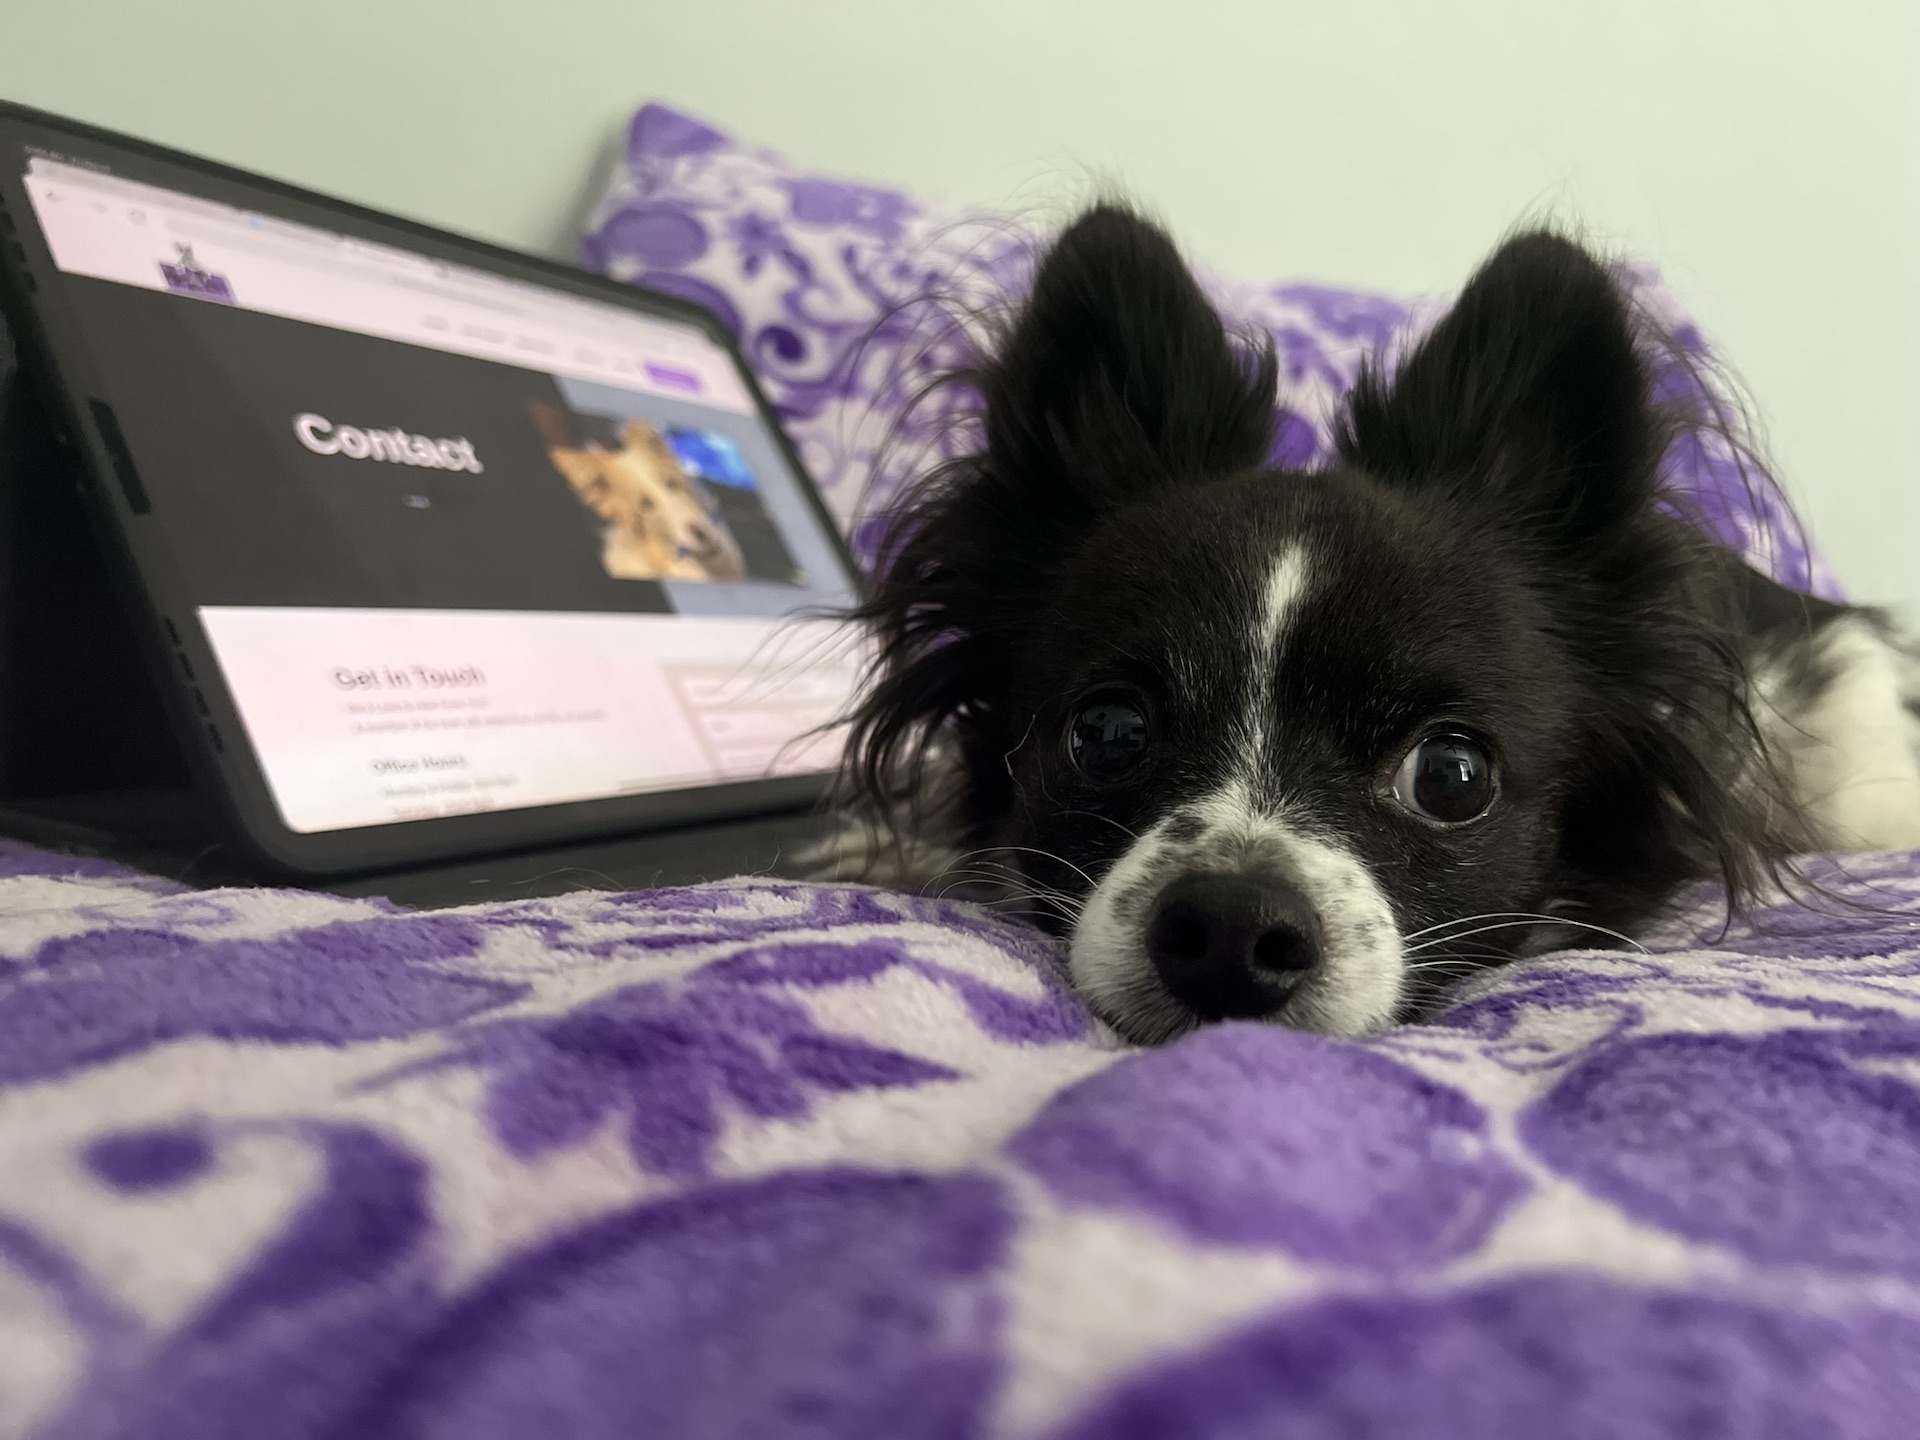 Chihuahua with ipad on purple bedding